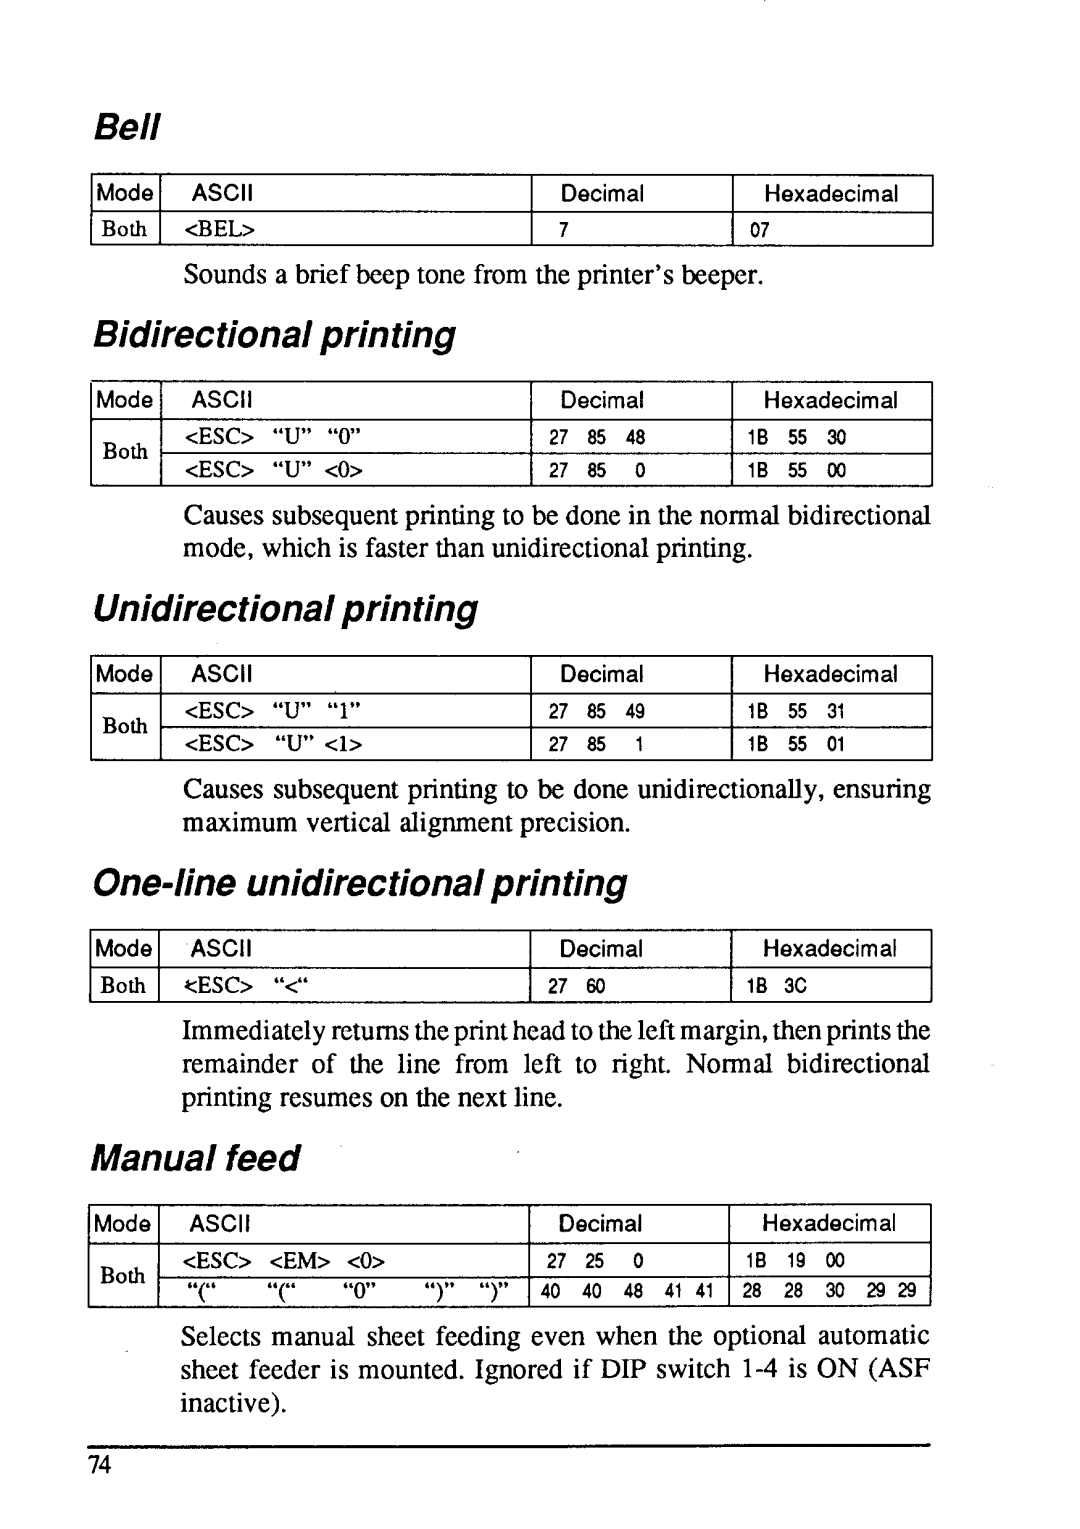 Star Micronics LC24-15 Bell, Bidirectional printing, Unidirectional prin thg, One-line unidirectional printhg, Manual feed 